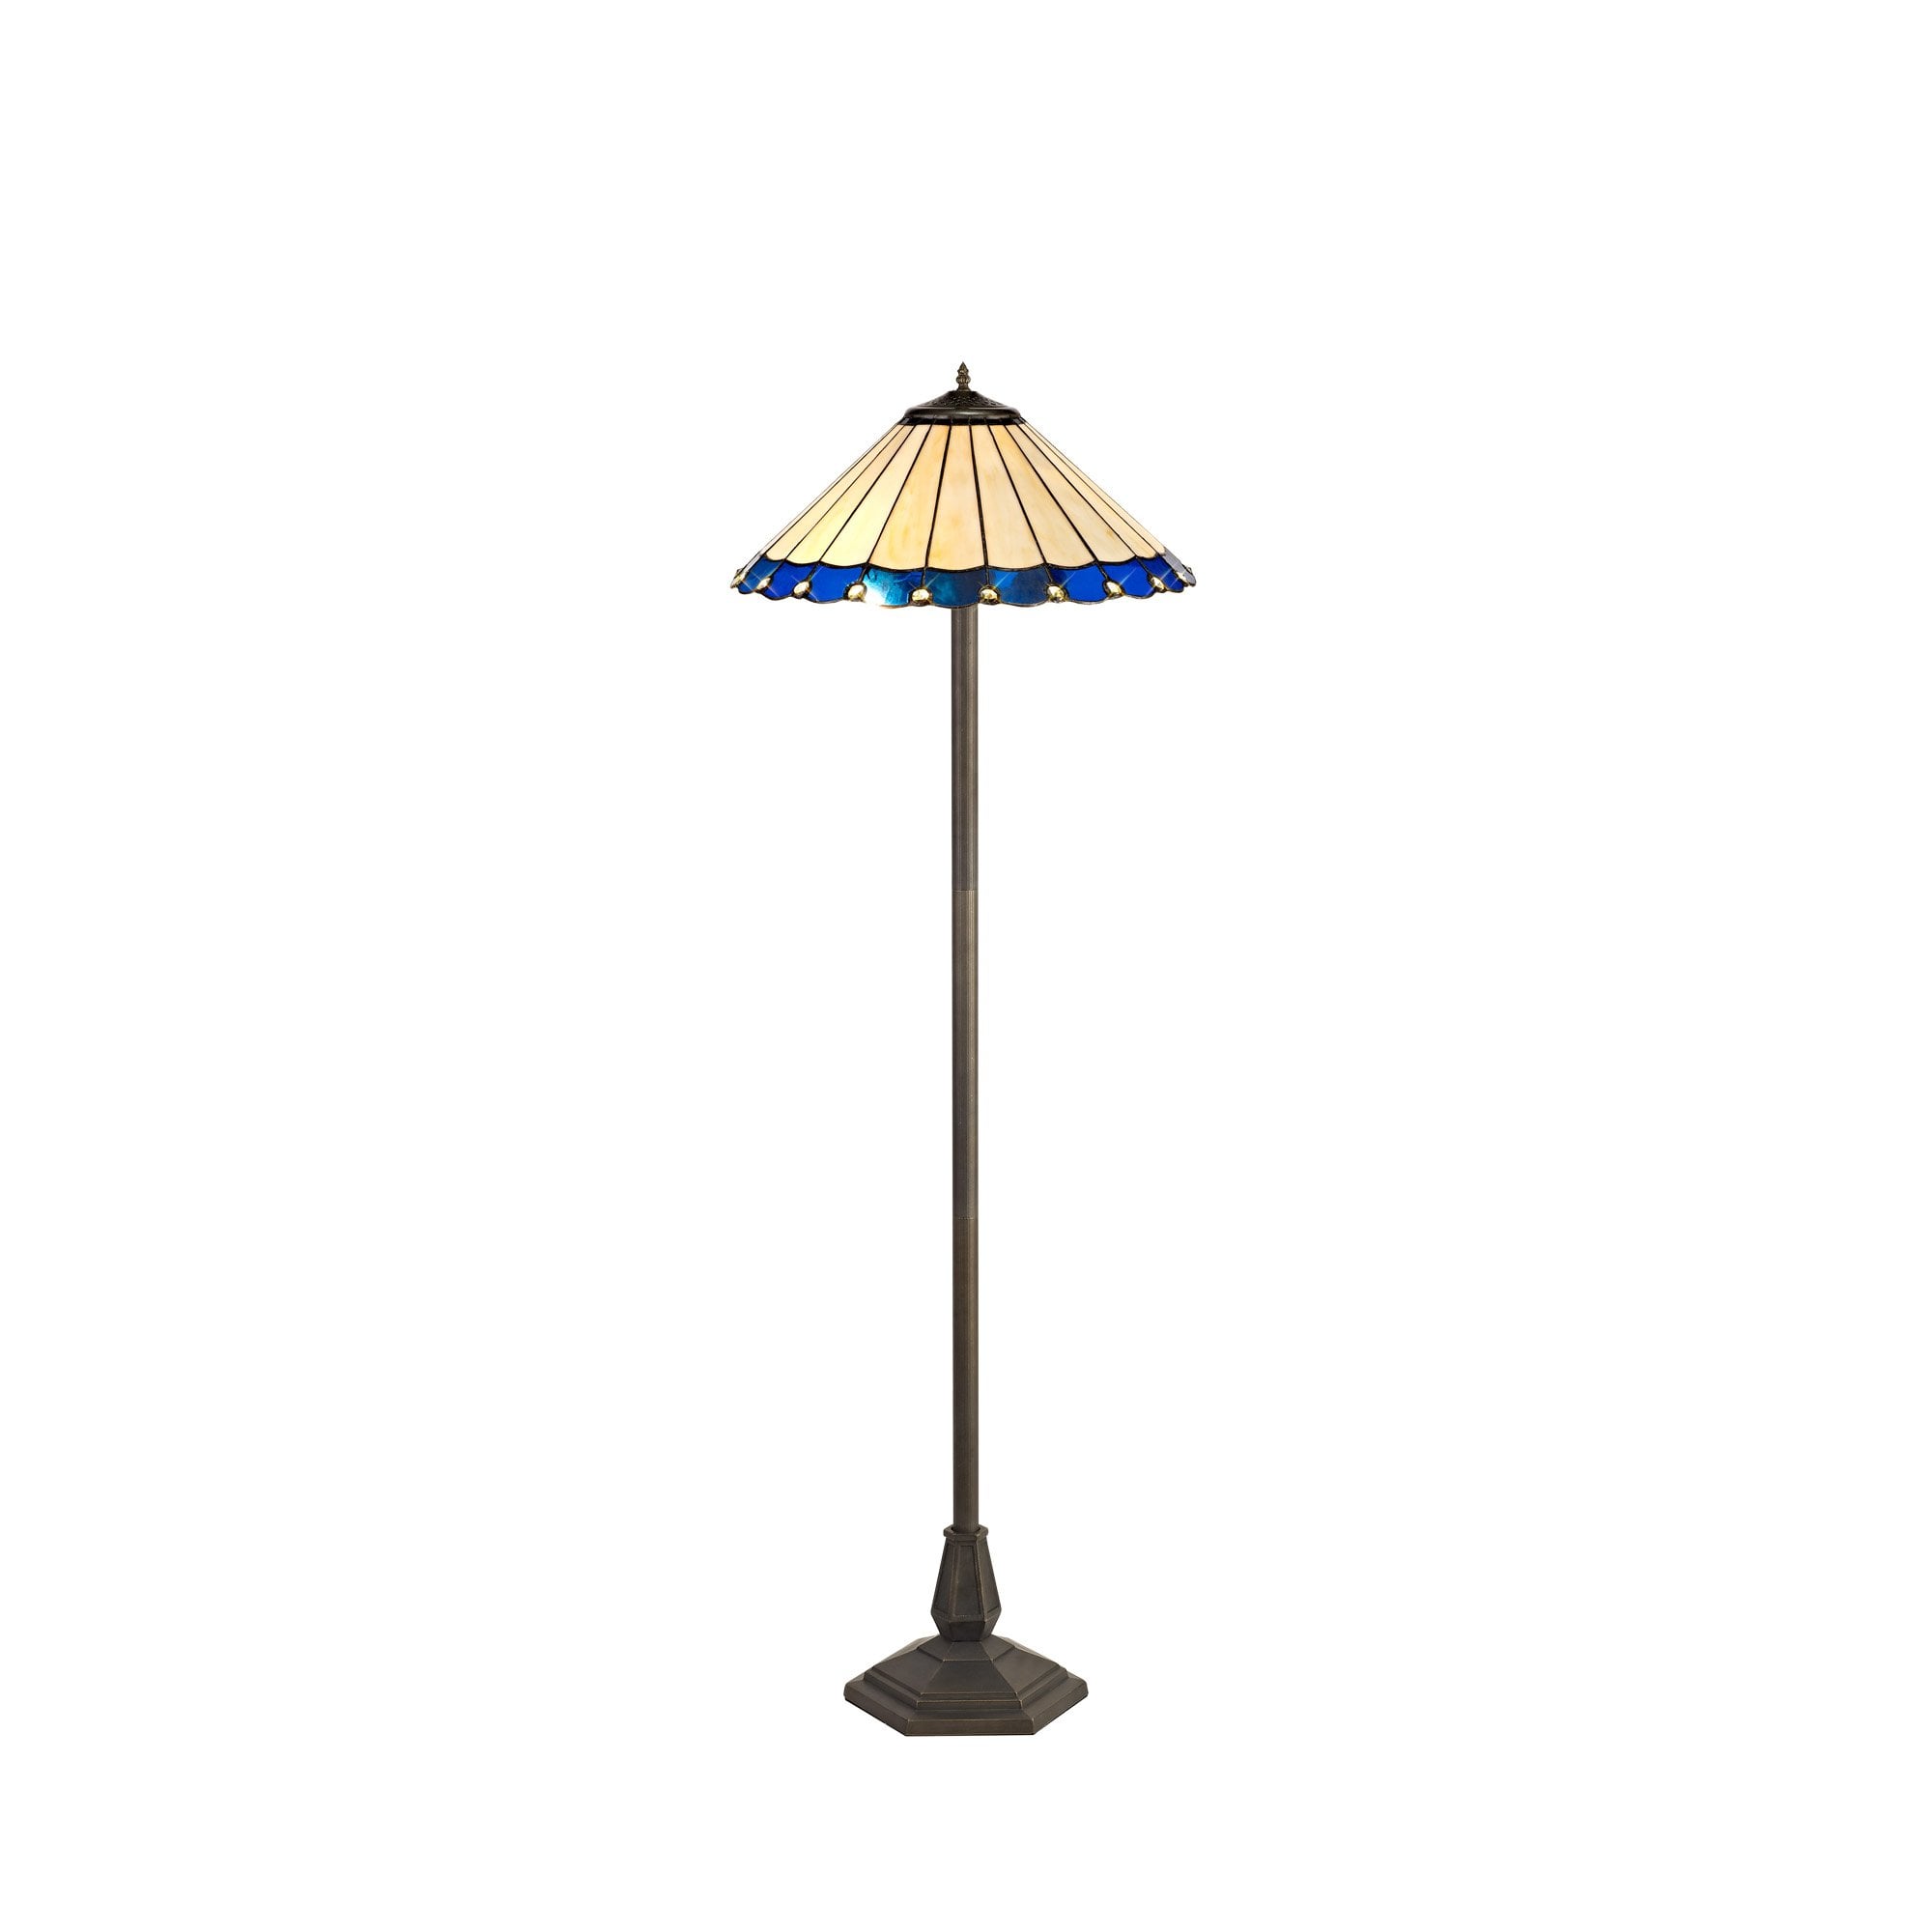 2 Light Octagonal Floor Lamp E27 With 40cm Tiffany Shade, Blue/Cream/Crystal/Aged Antique Brass